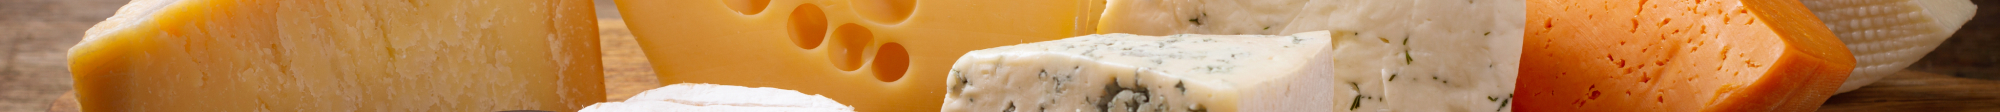 Comprar queso país de origen gourmet | Mixtura Gourmet